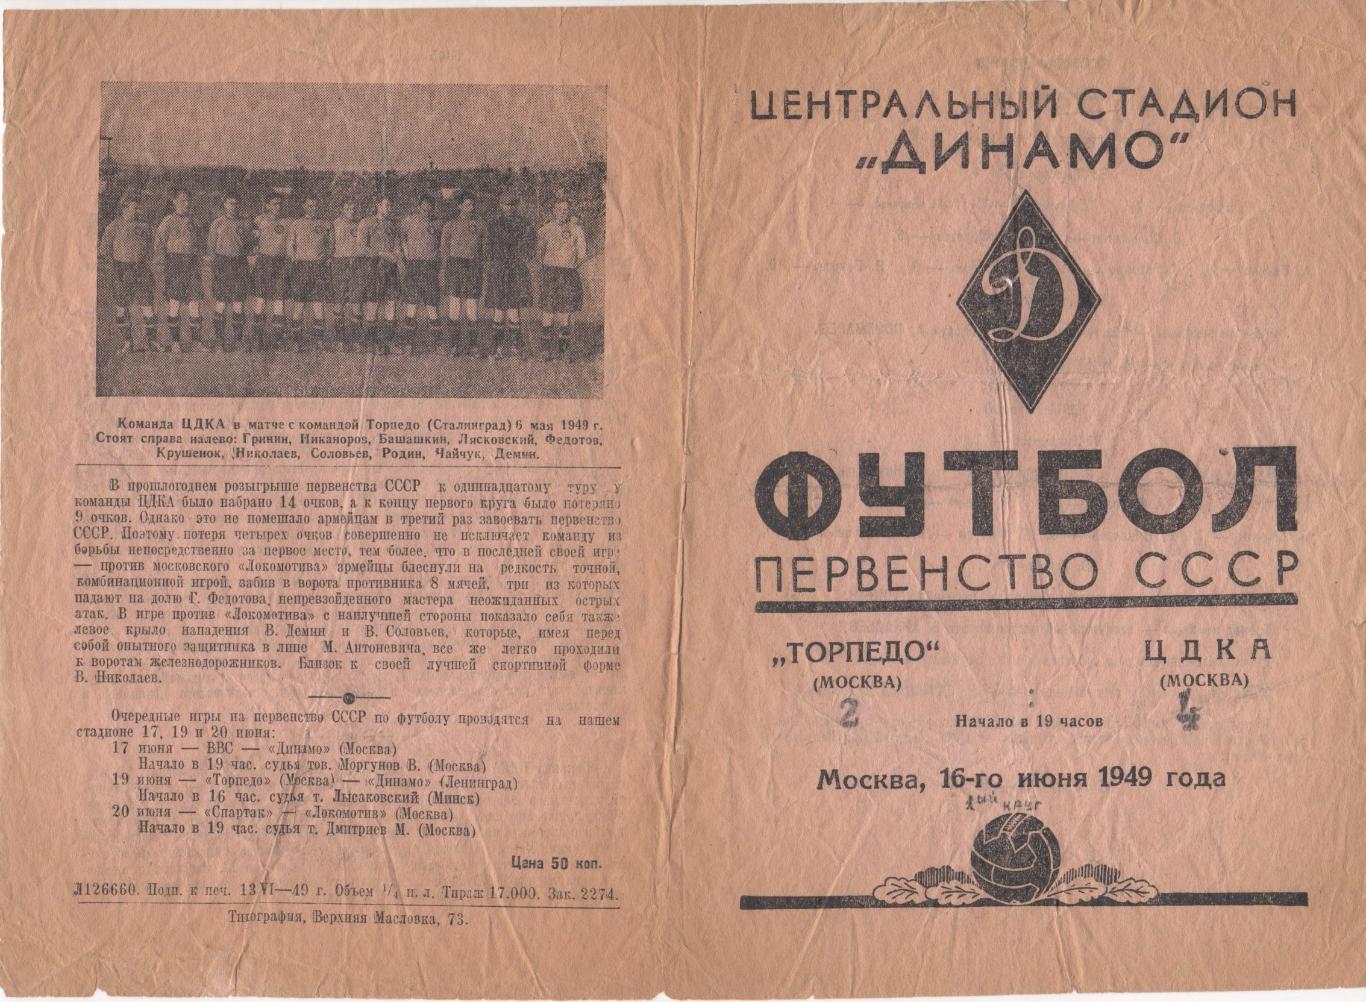 Программка матча Торпедо Москва - ЦДКА (ЦСКА). 16 июня 1949 г. Стадион Динамо. 1